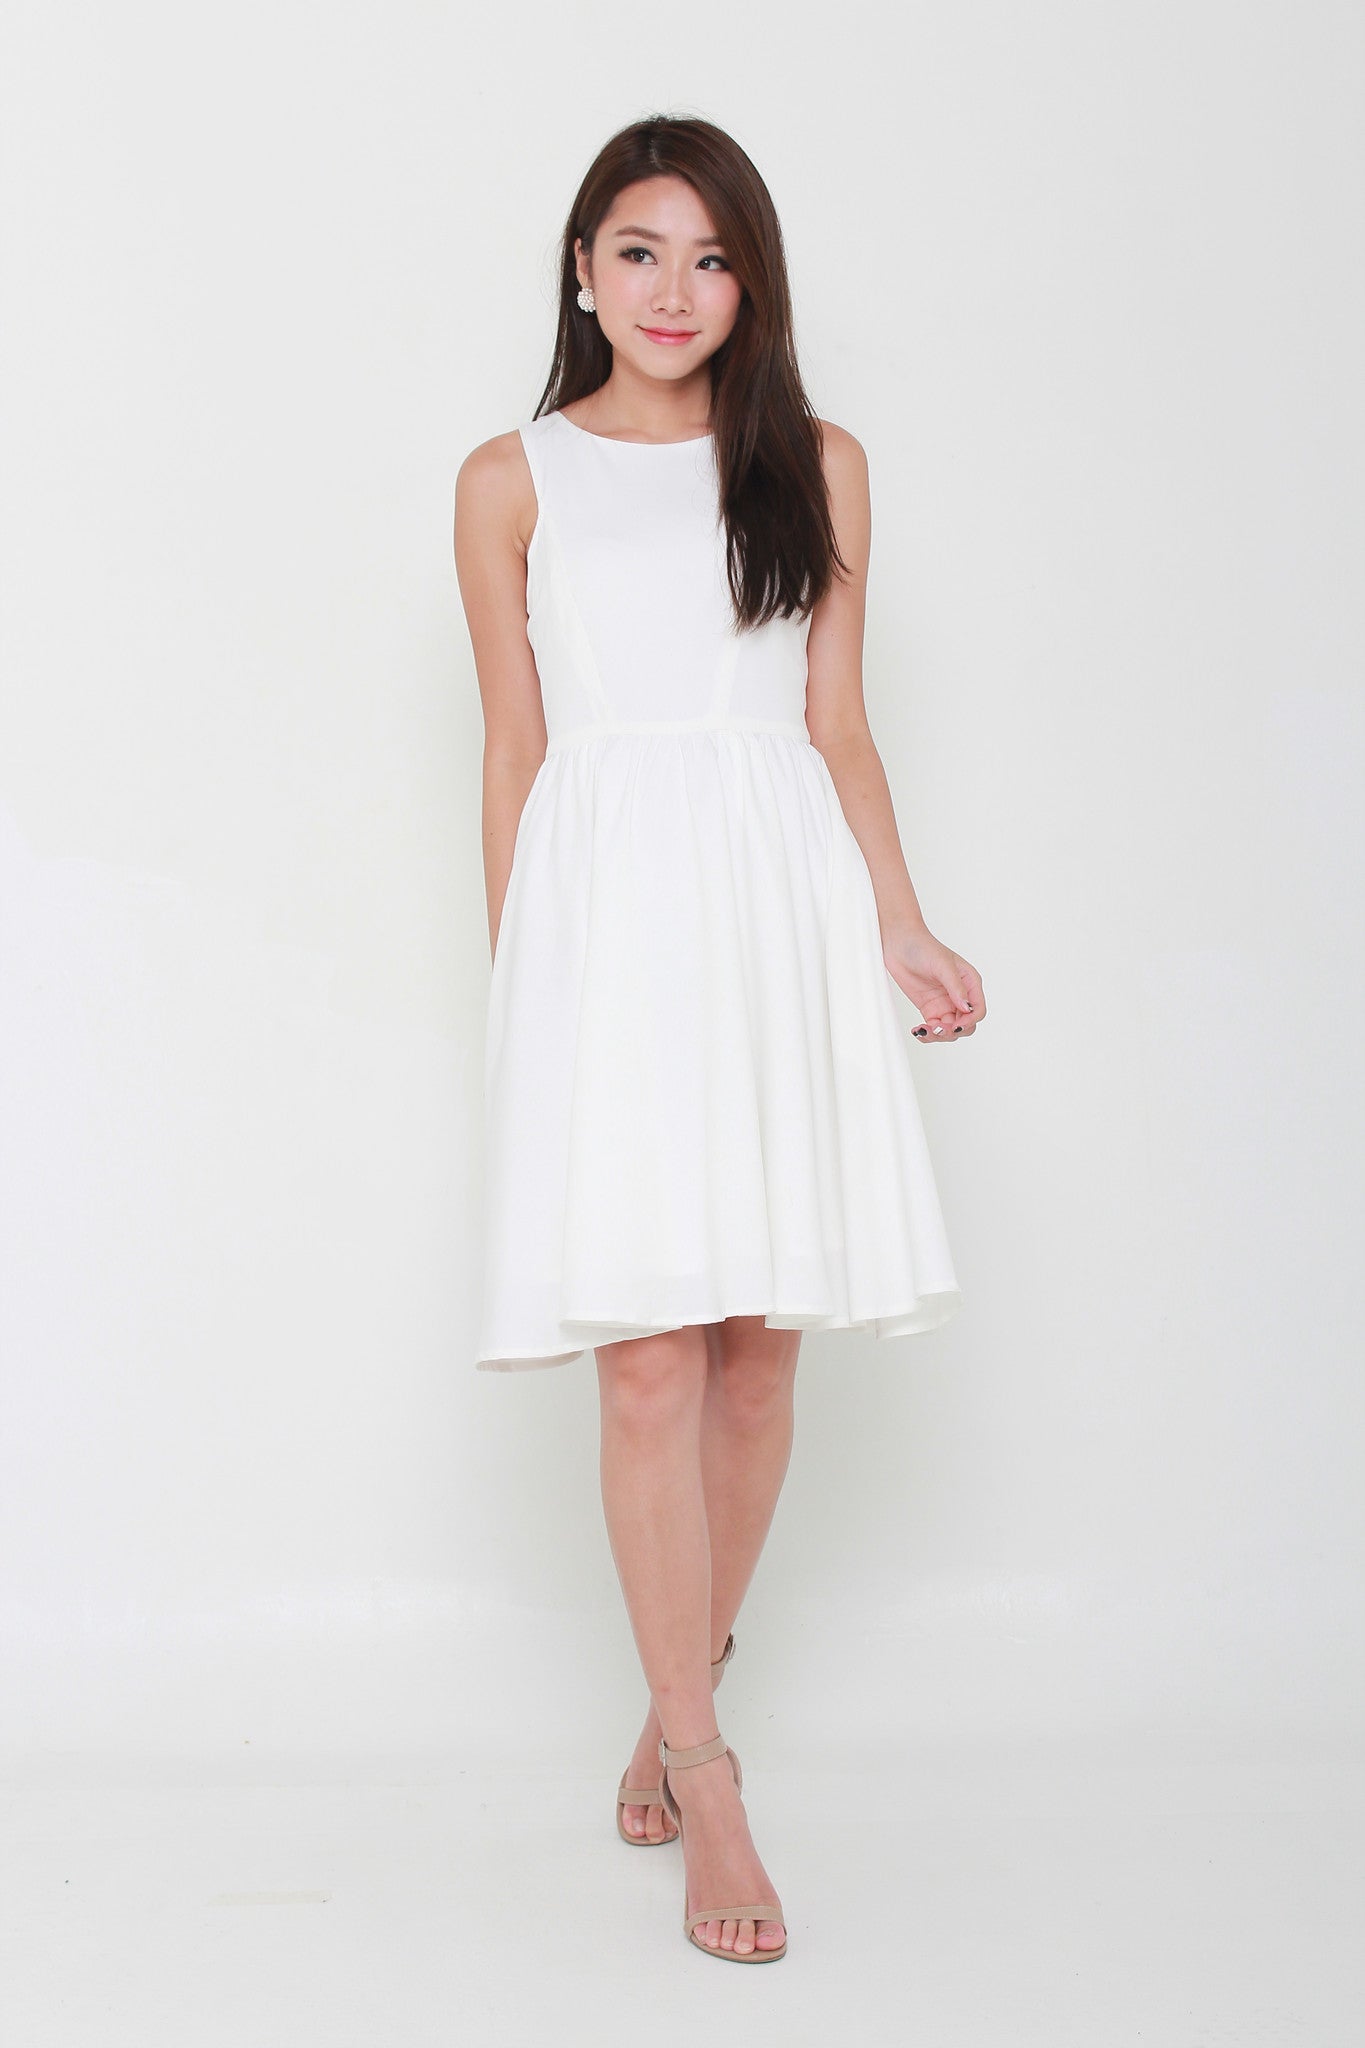 Kacey Cut In Midi Dress in White